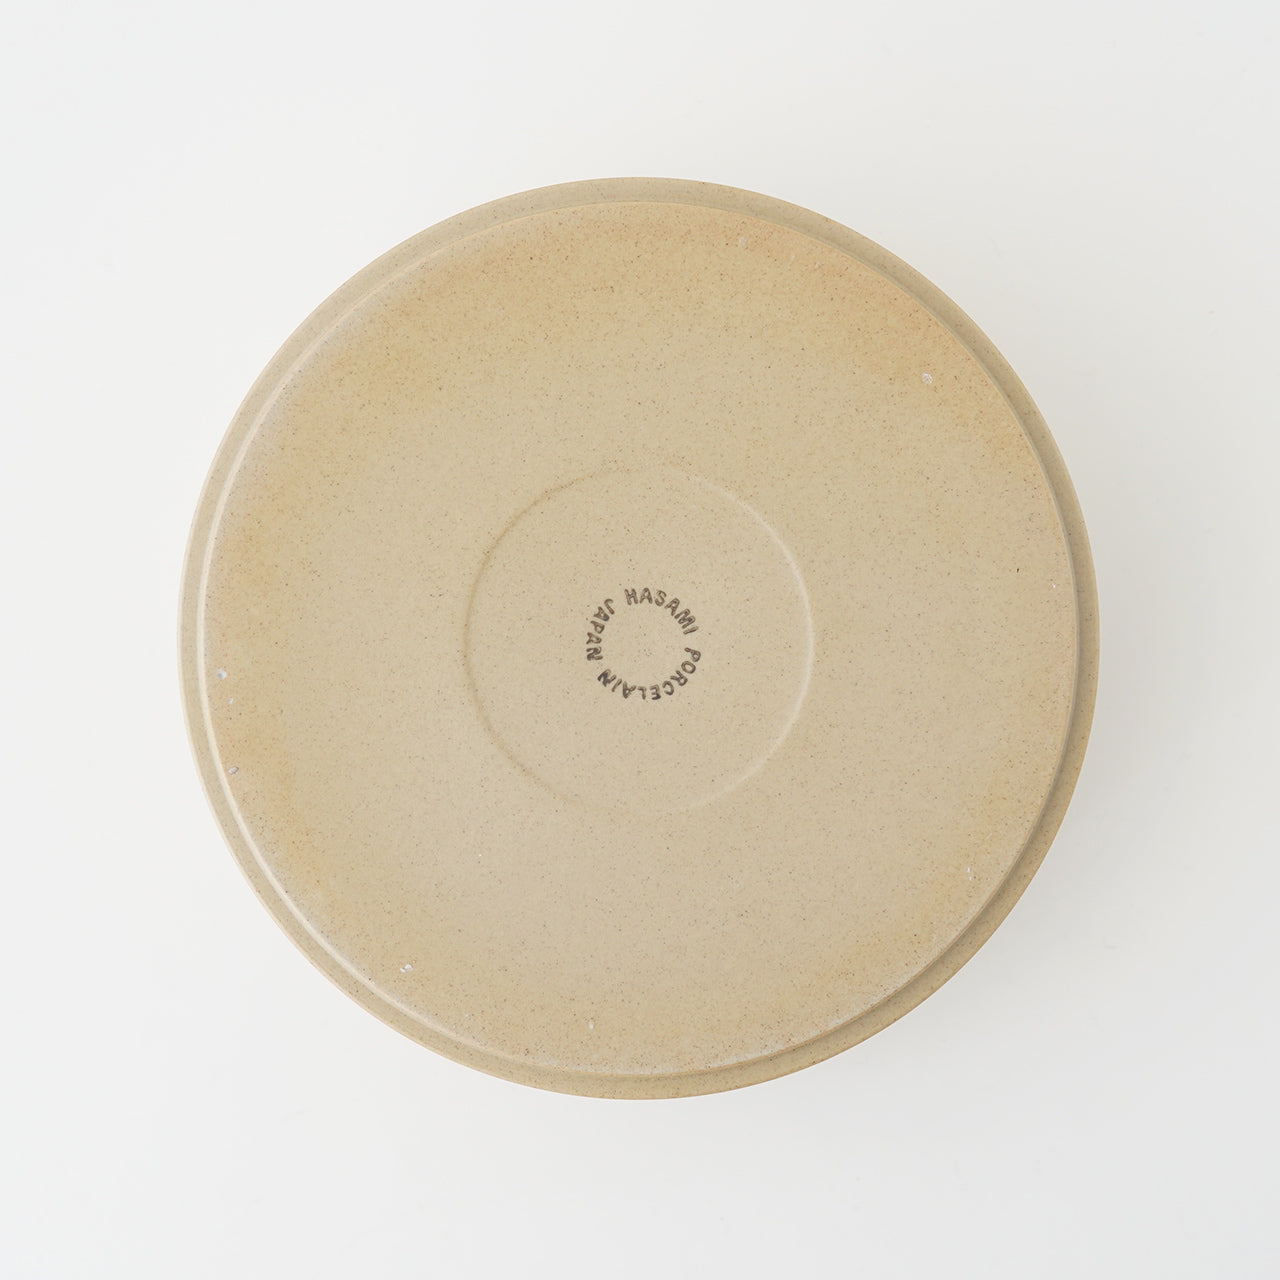 HASAMI PORCELAIN ハサミポーセリン ボウル Bowl 18.5cm×5.5cm 波佐見焼き 西海陶器 皿 HP009